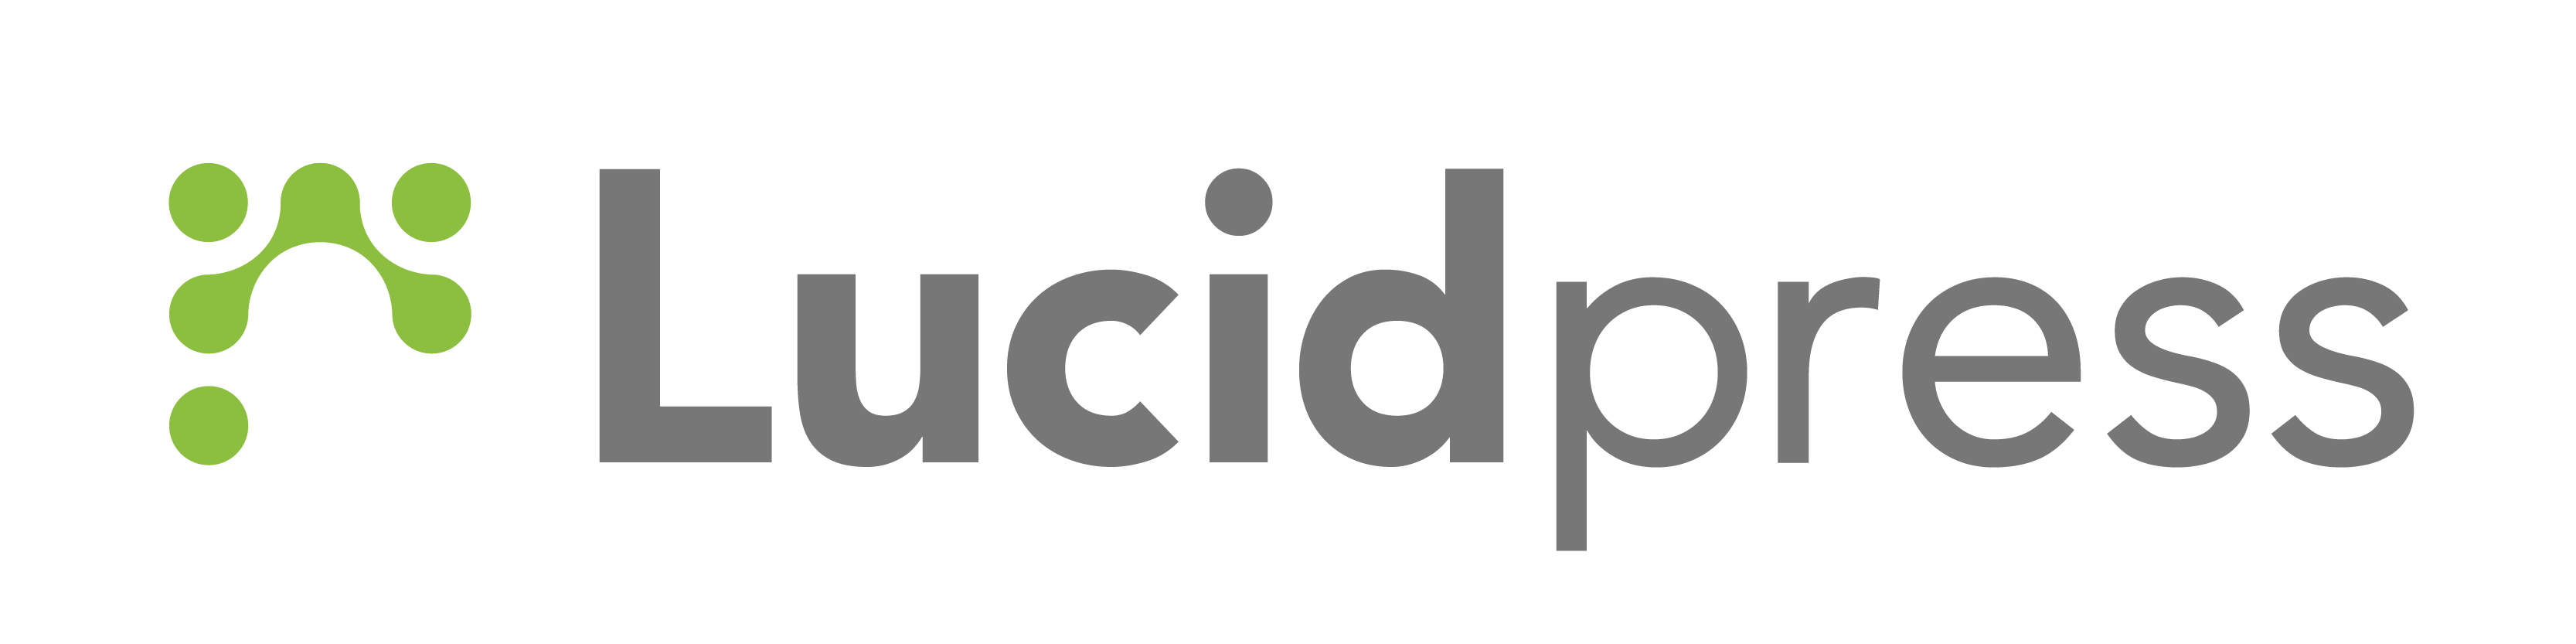 Lucidpress official logo